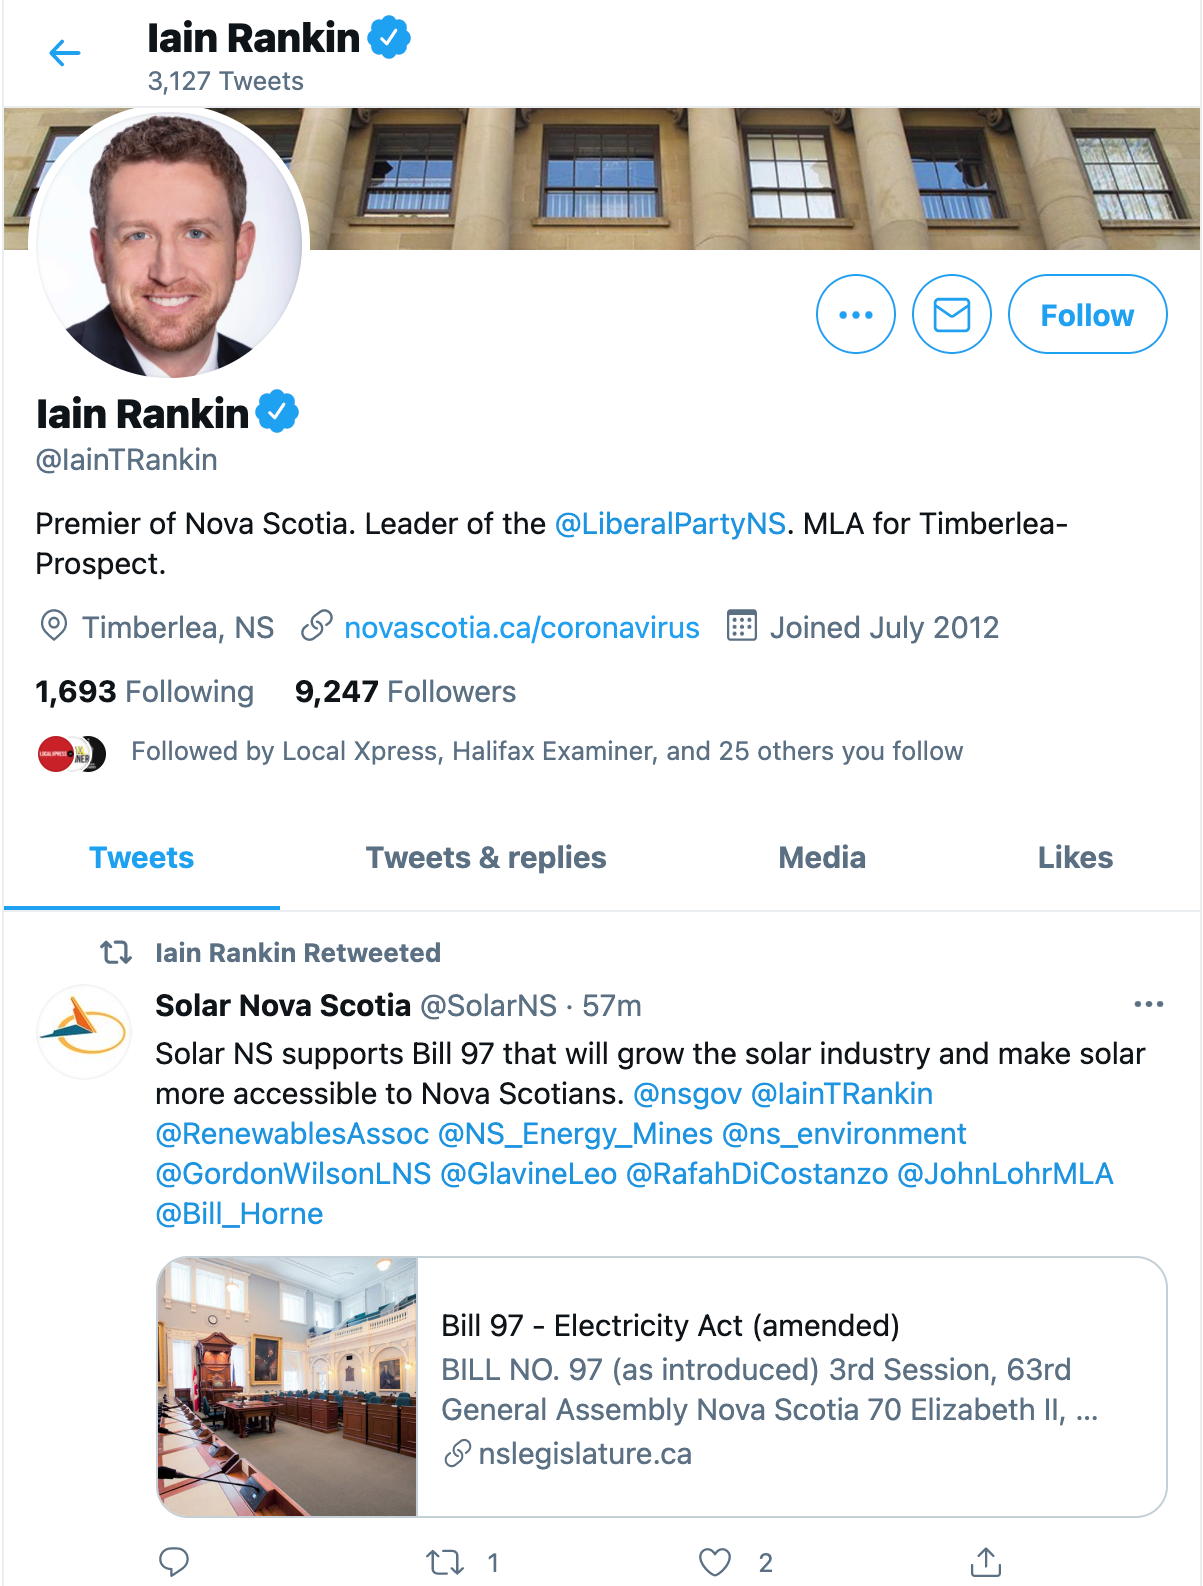 Premier Iain Rankin retweets Solar NS' 